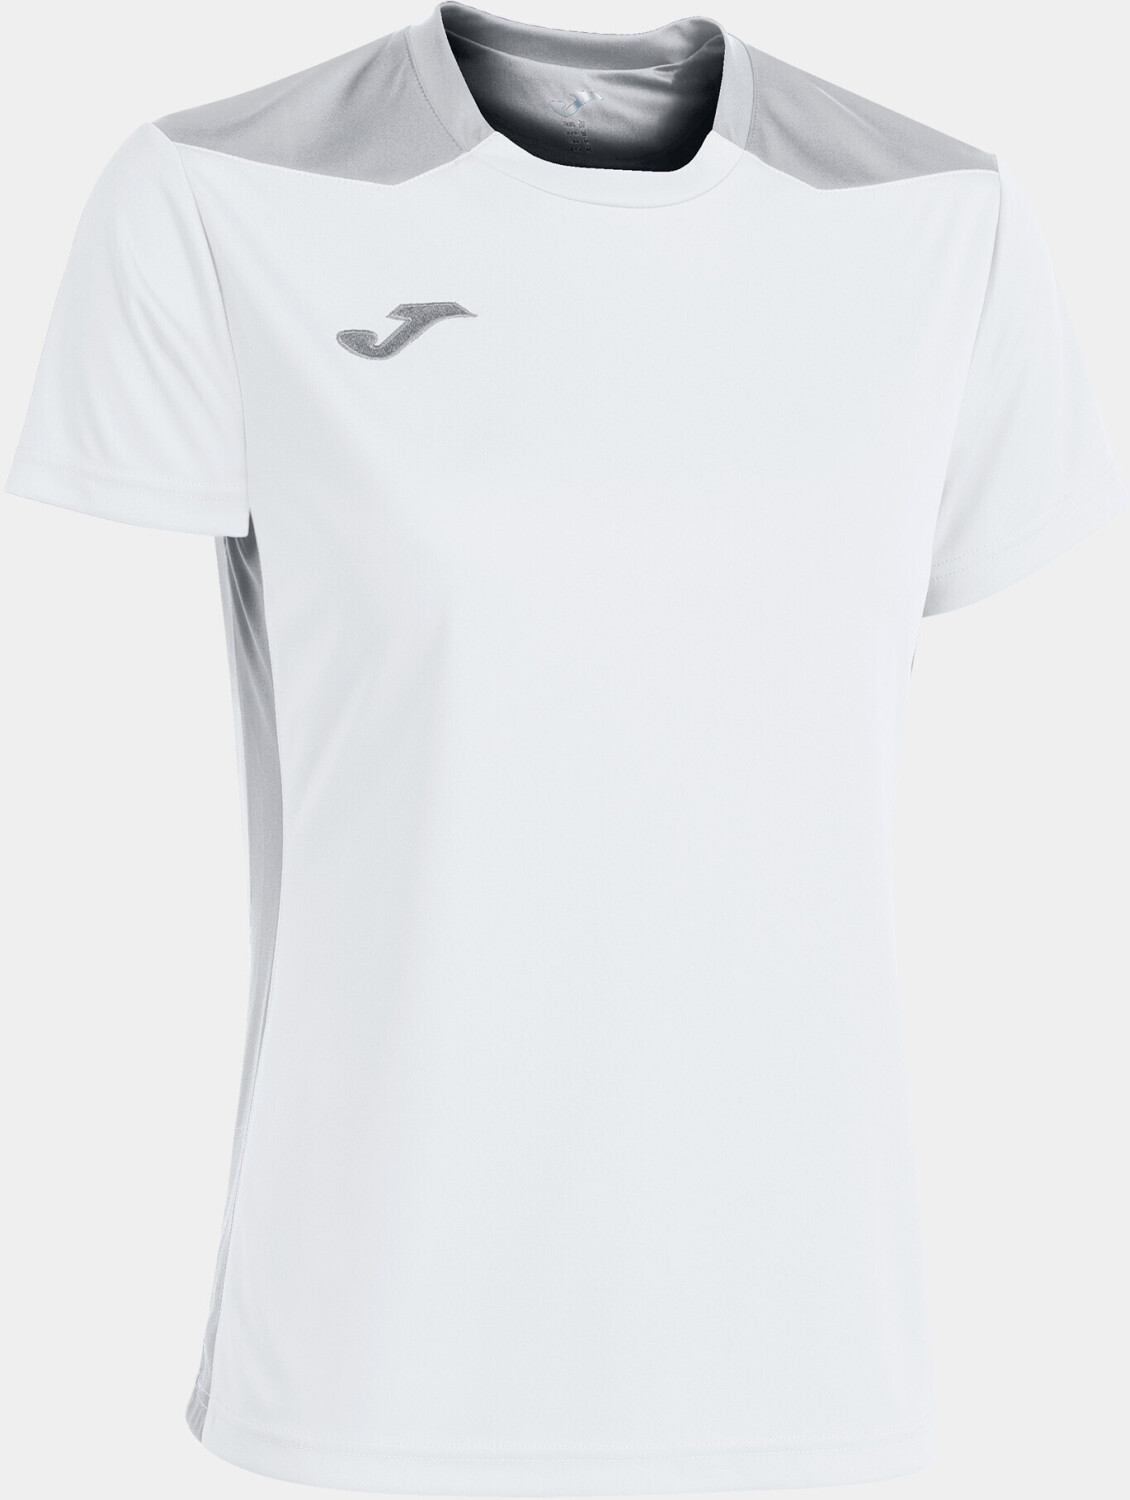 Photos - Football Kit Joma Championship VI Shirt Youth  white/grey (101822k)